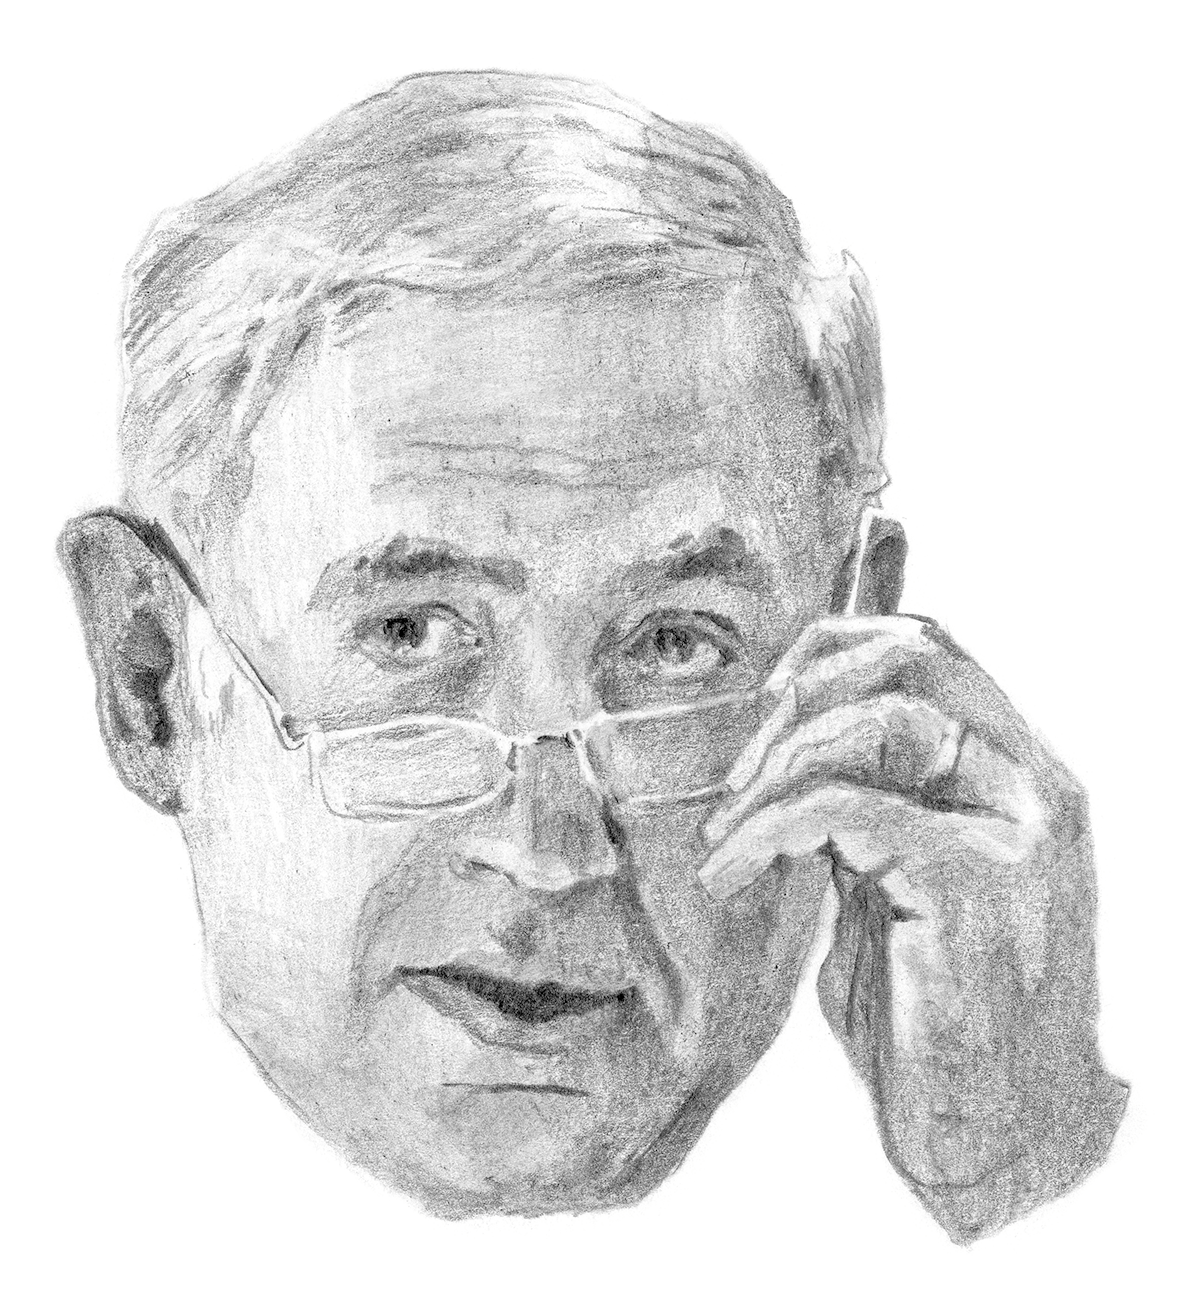 Former Israeli Prime Minister Benjamin Netanyahu. Illustration by Igor Tepikin.